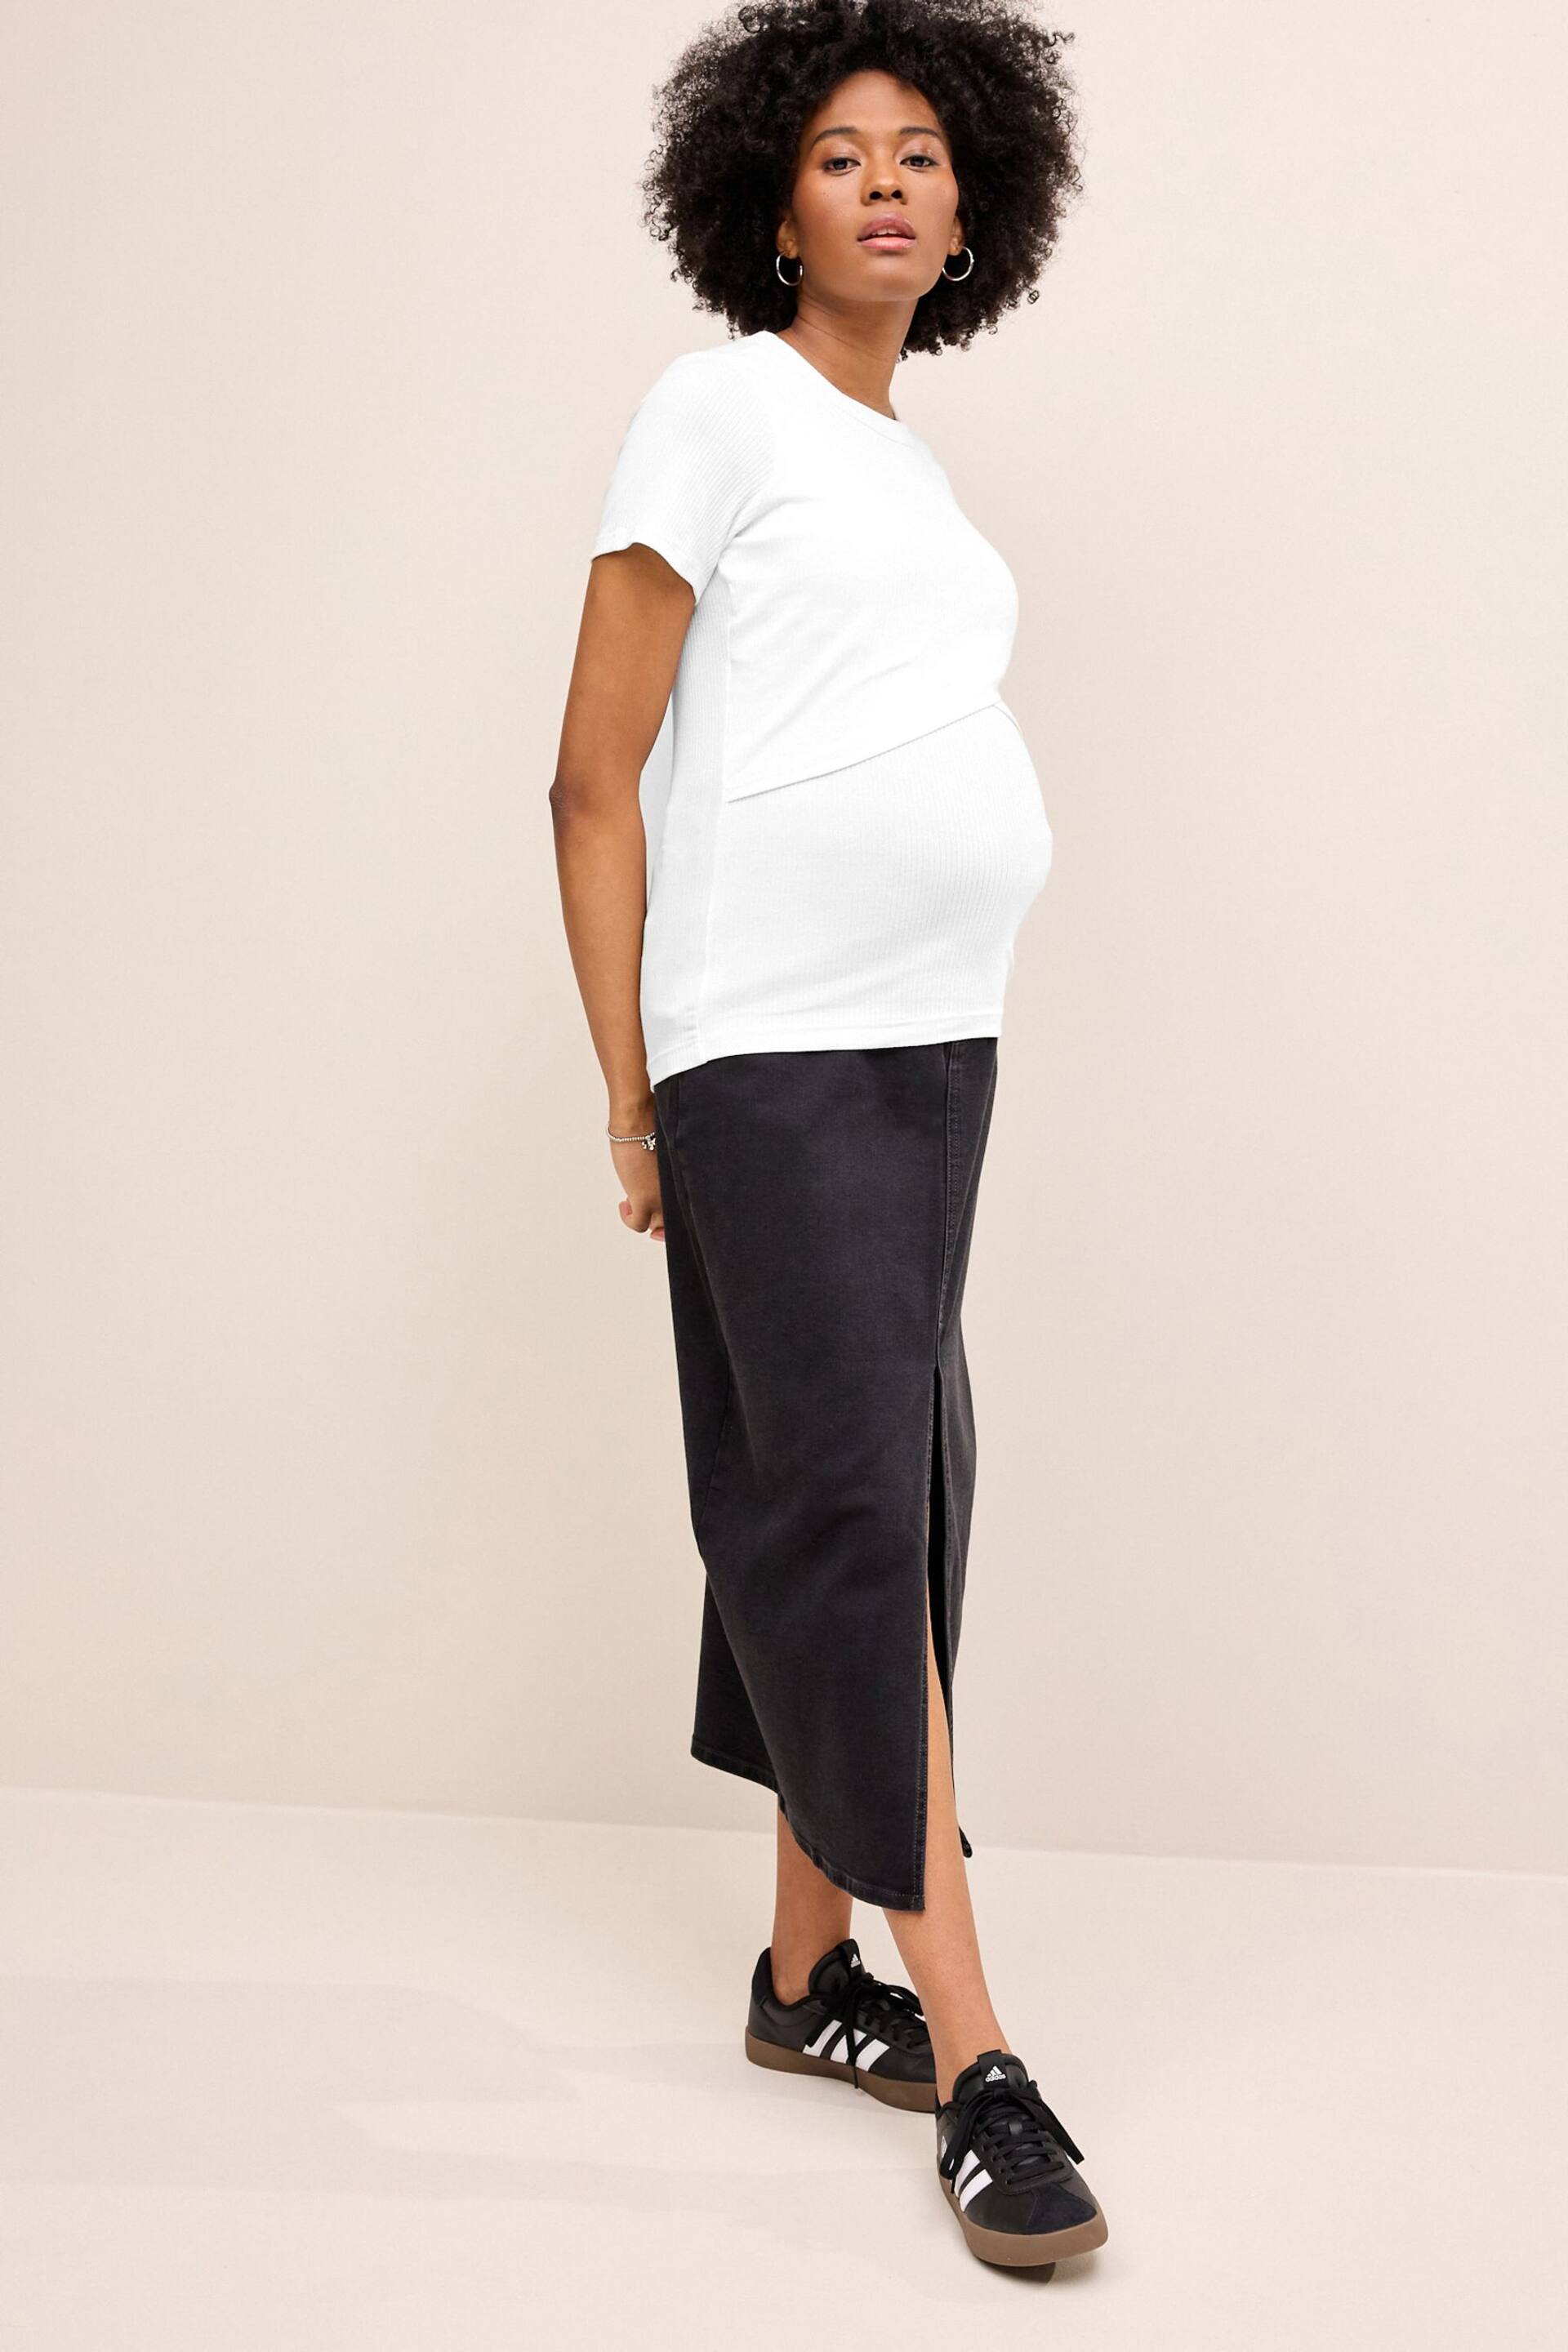 White Maternity Nursing T-Shirt - Image 2 of 8